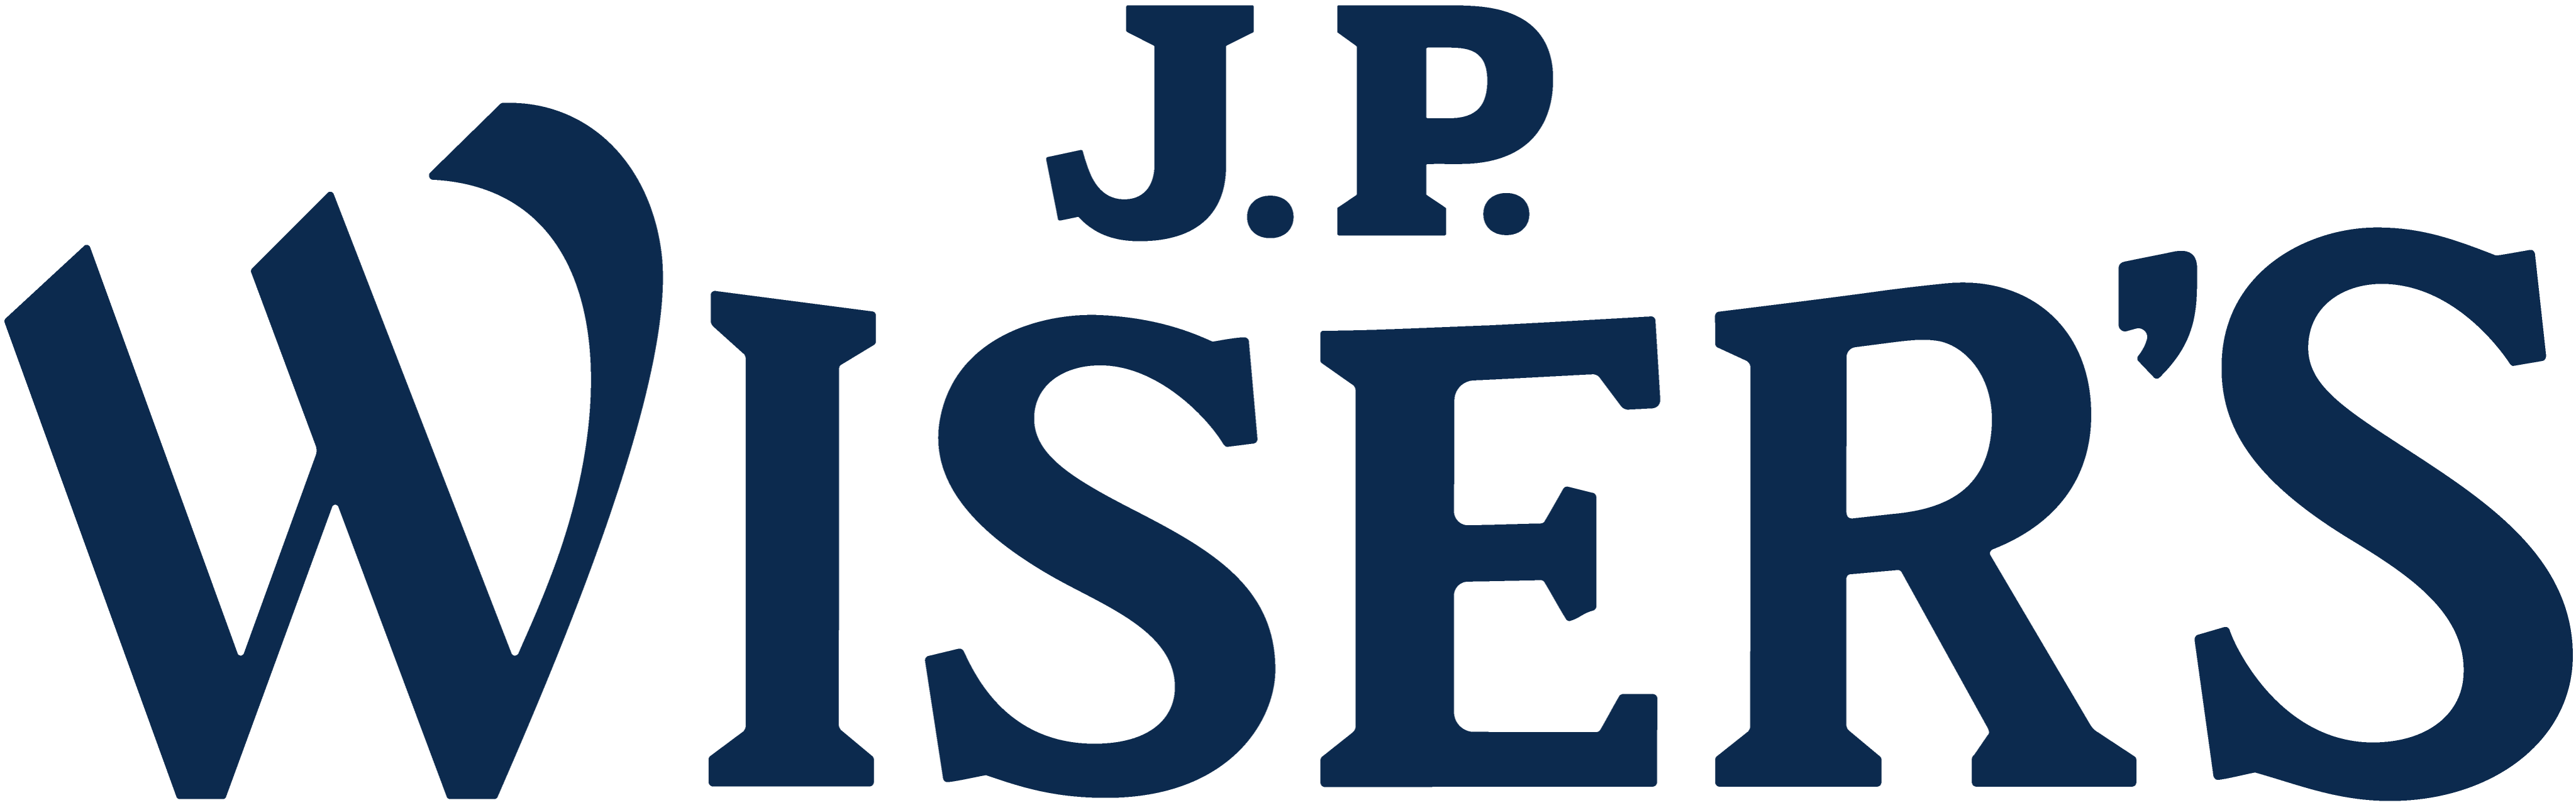 Brand_JpWiser_logo_blue